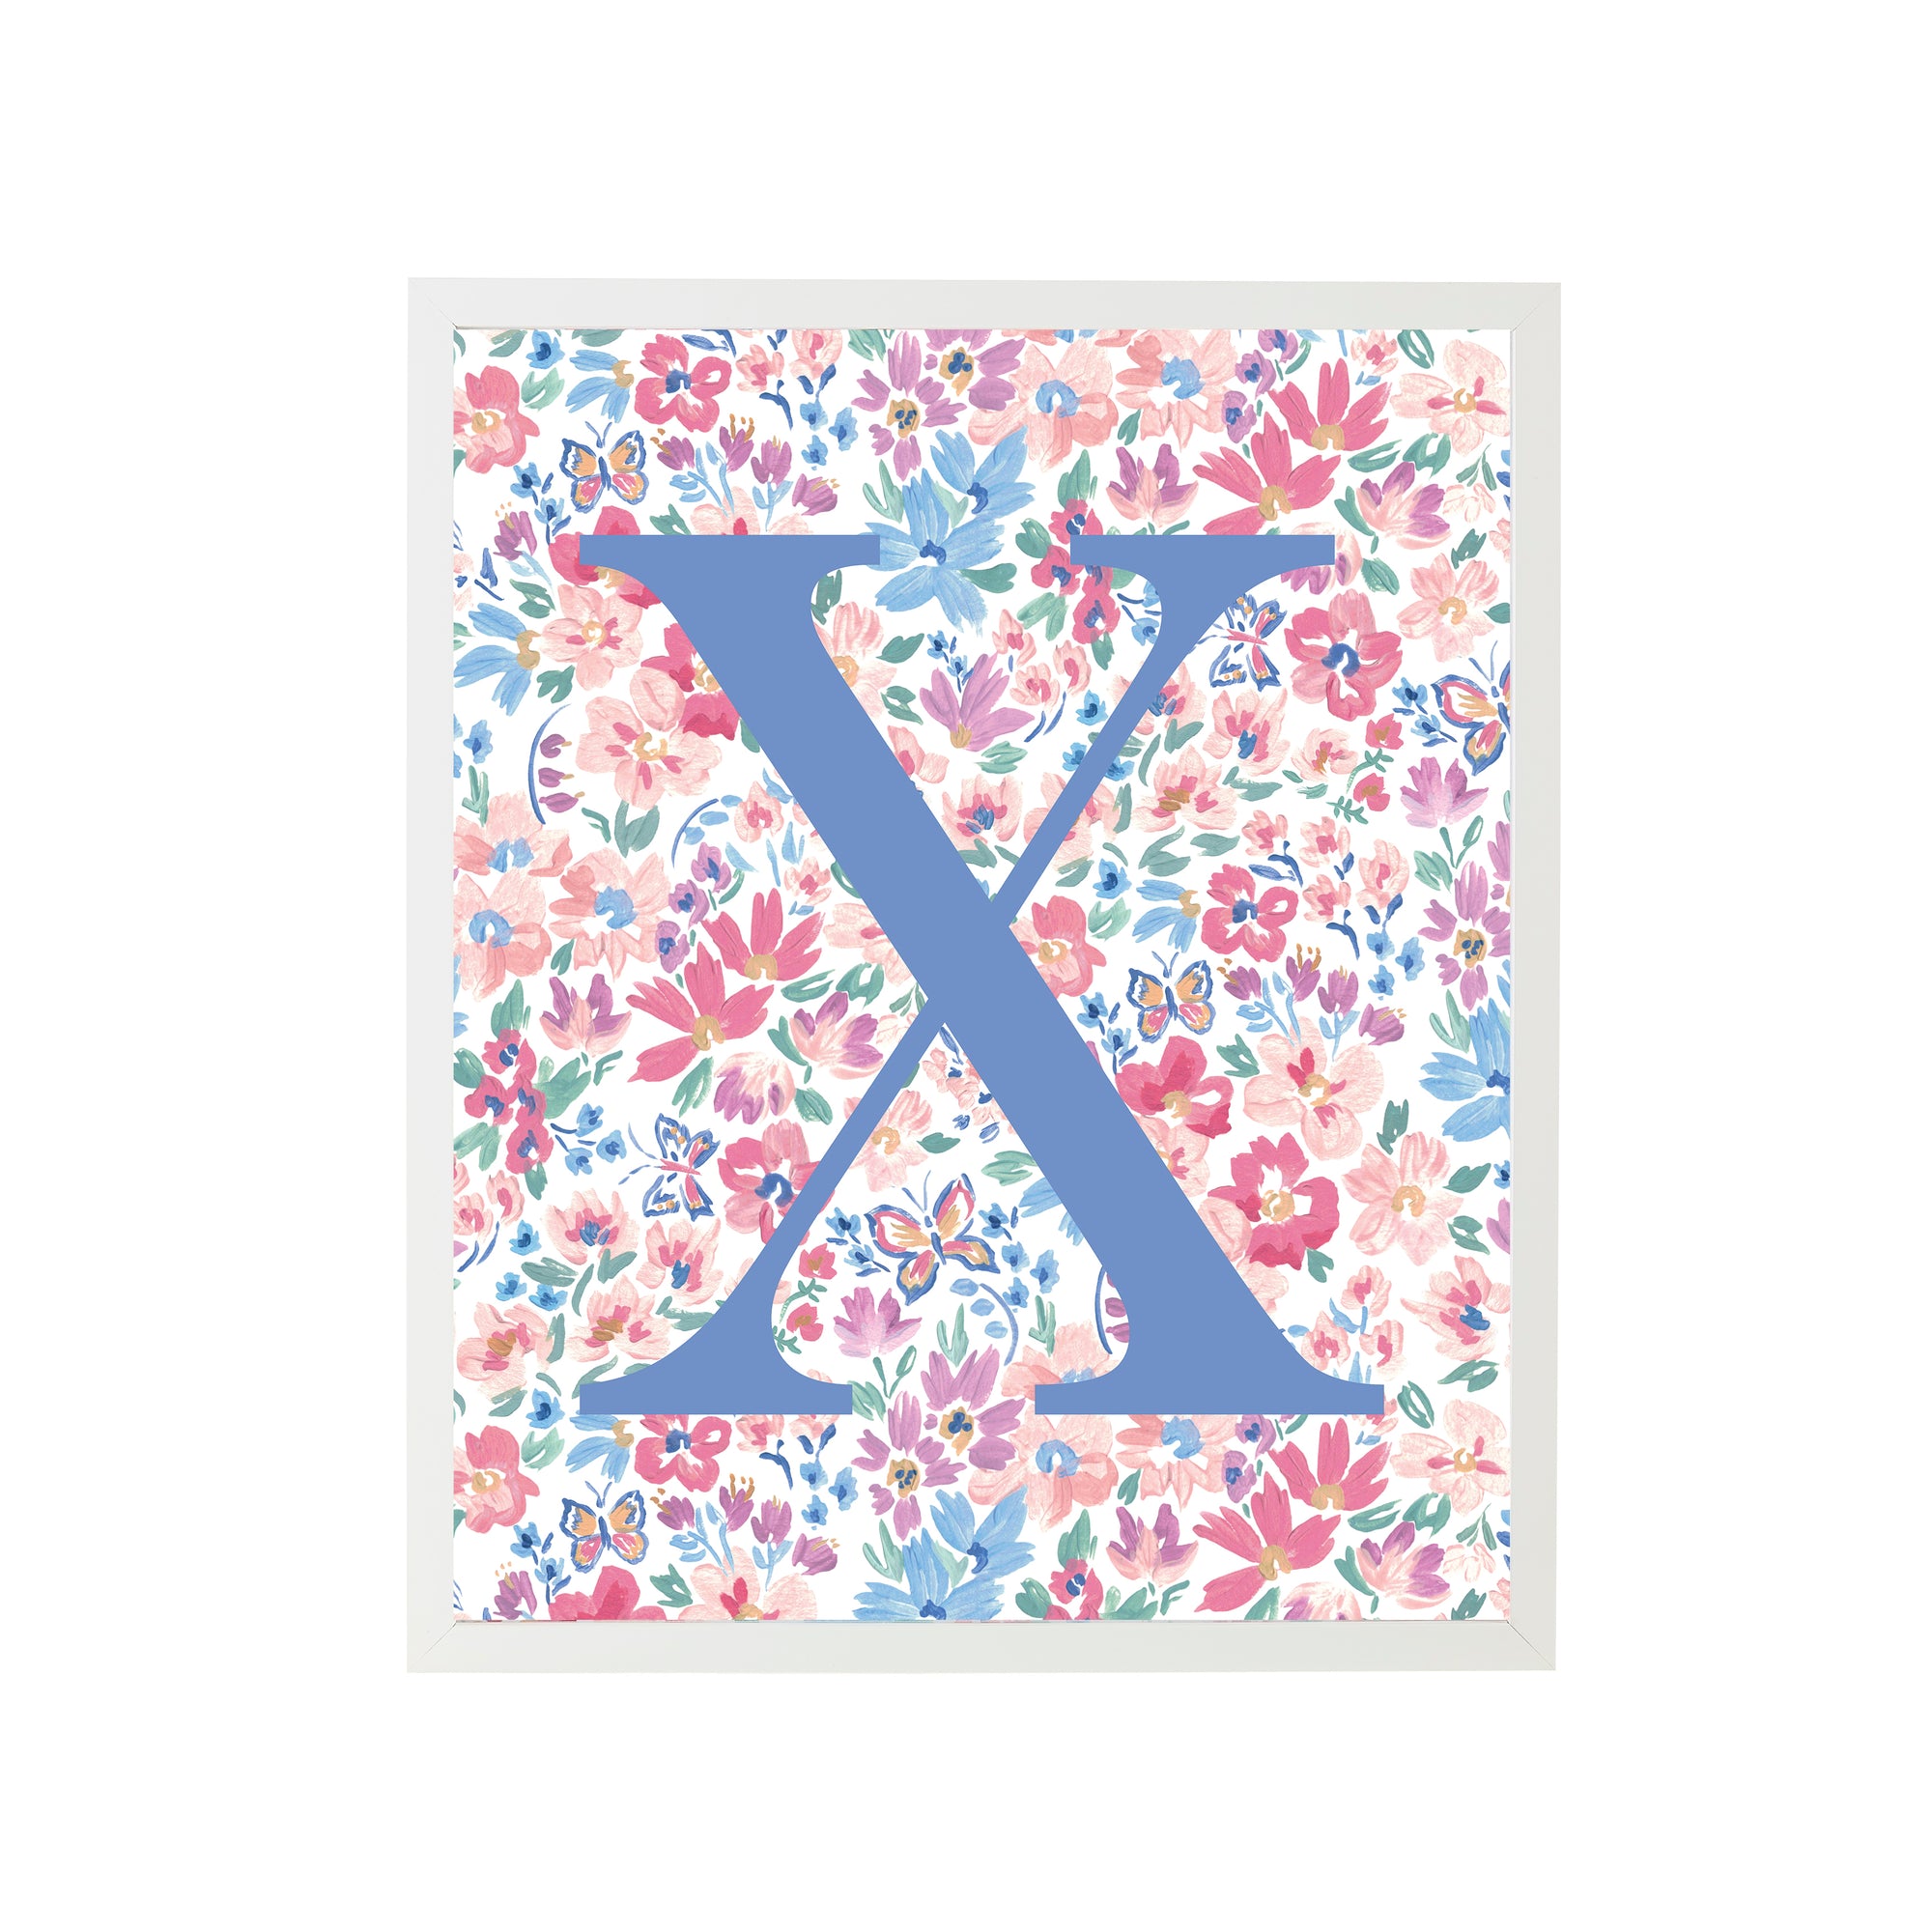 Butterfly Garden Letter "X" Art Print Nursery Decor